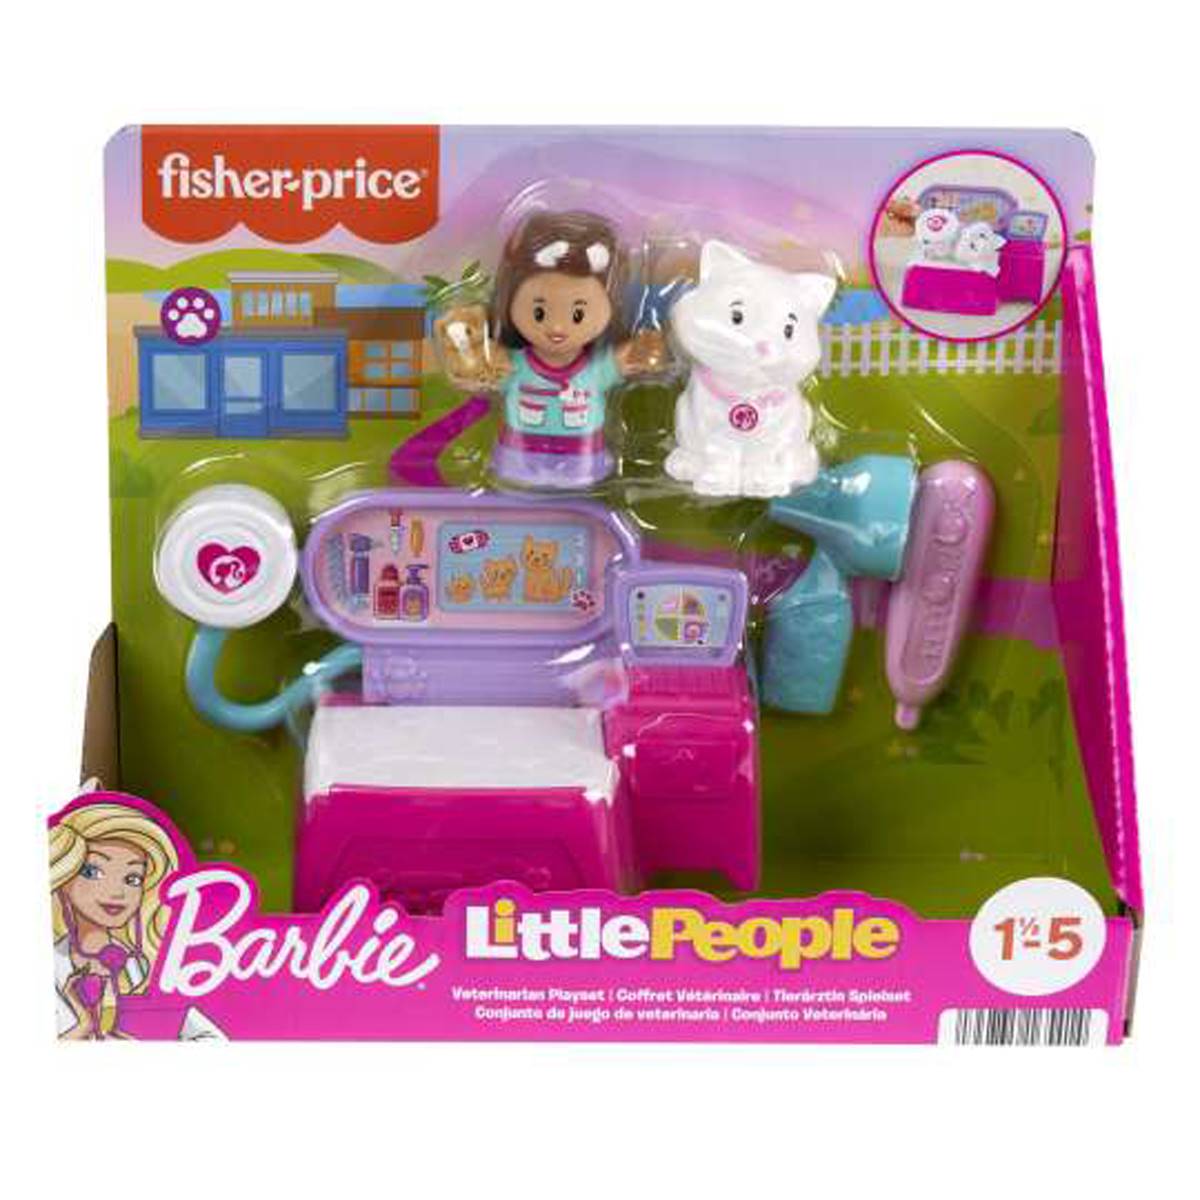 Fisher-Price(R) Little People(R) Barbie(R) Vet